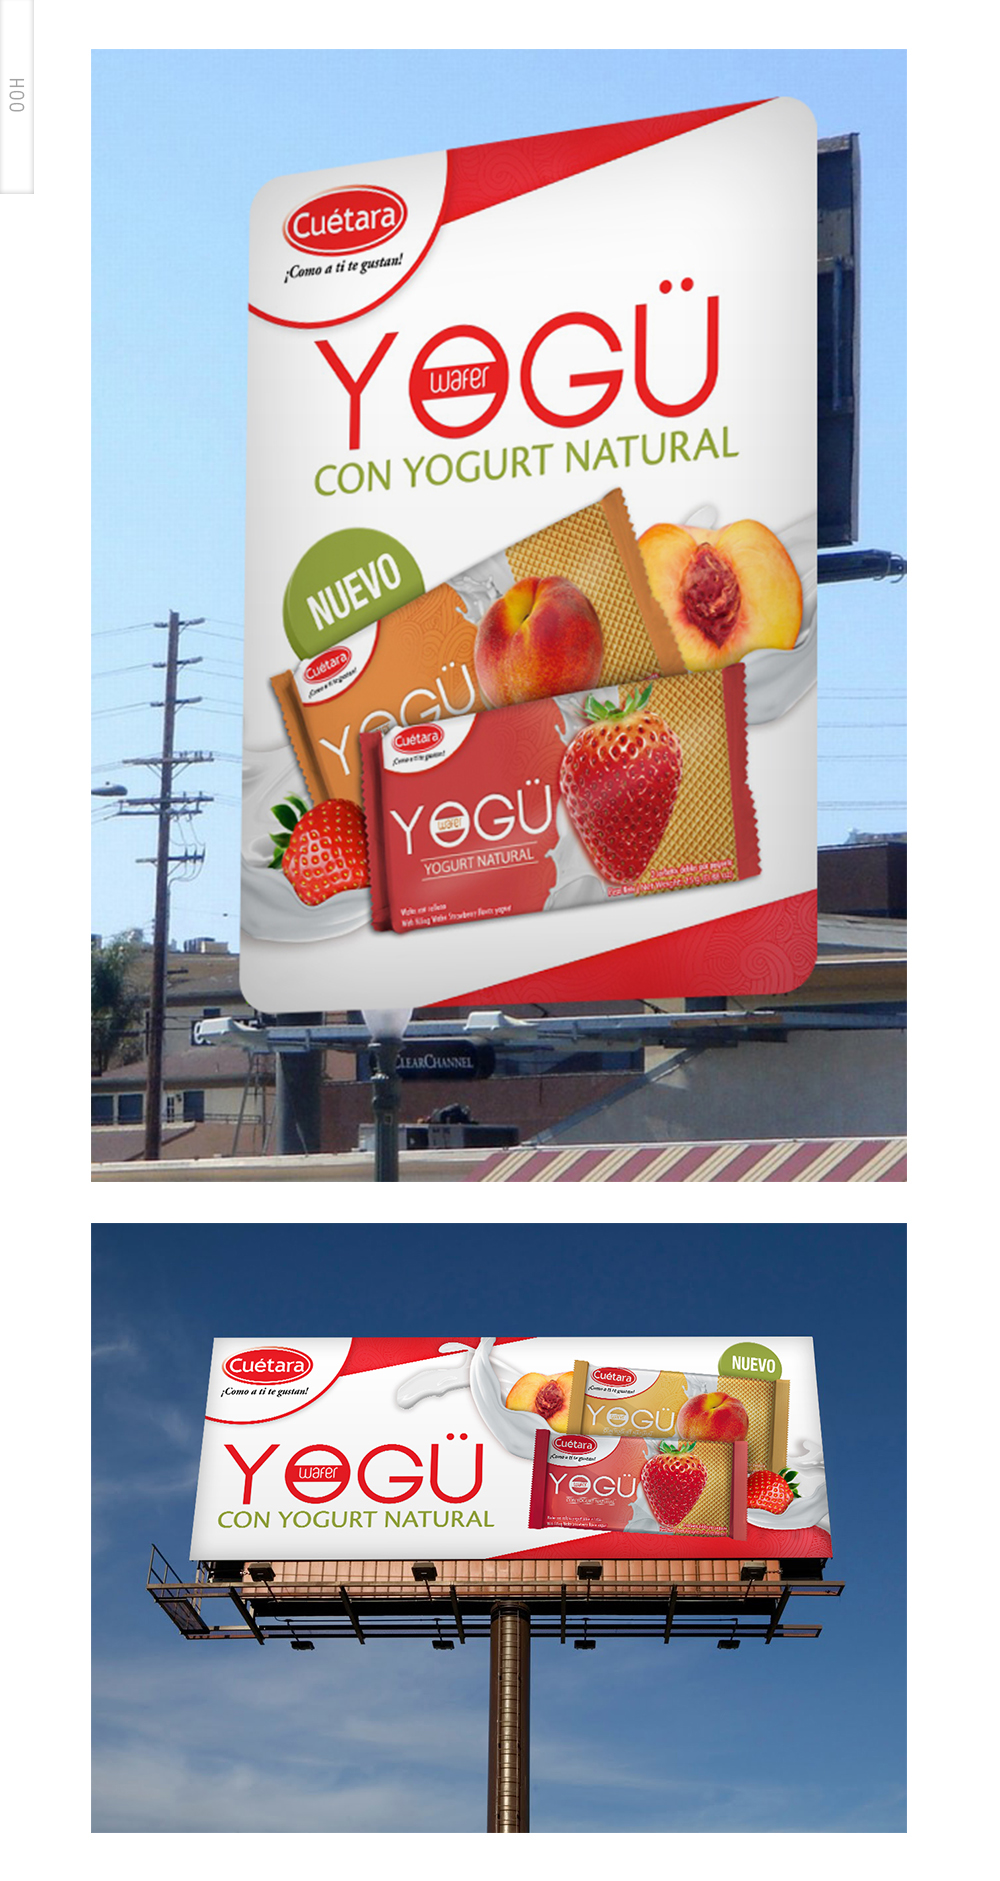 xlediaz wafer Guatemala fs comunicación galleta empaques fresa melocoton fruit cookie yogurt